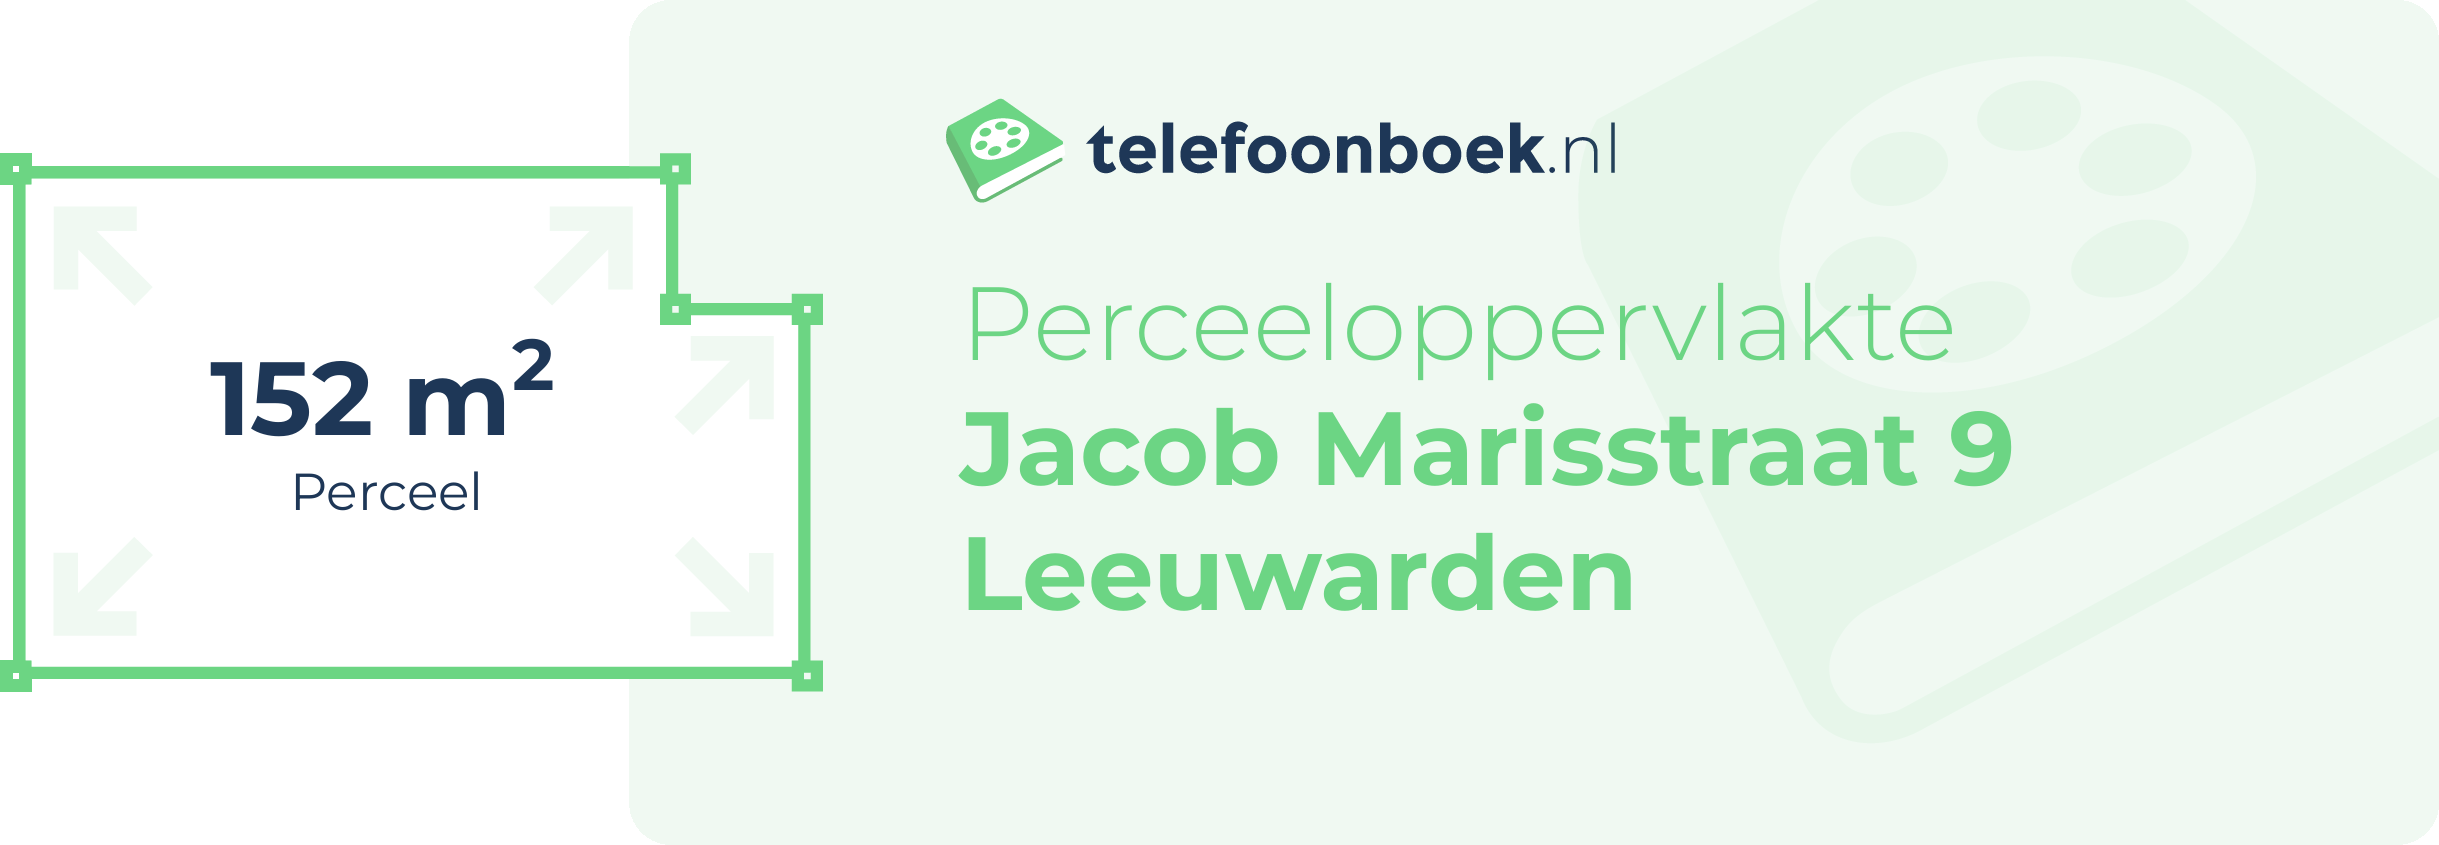 Perceeloppervlakte Jacob Marisstraat 9 Leeuwarden